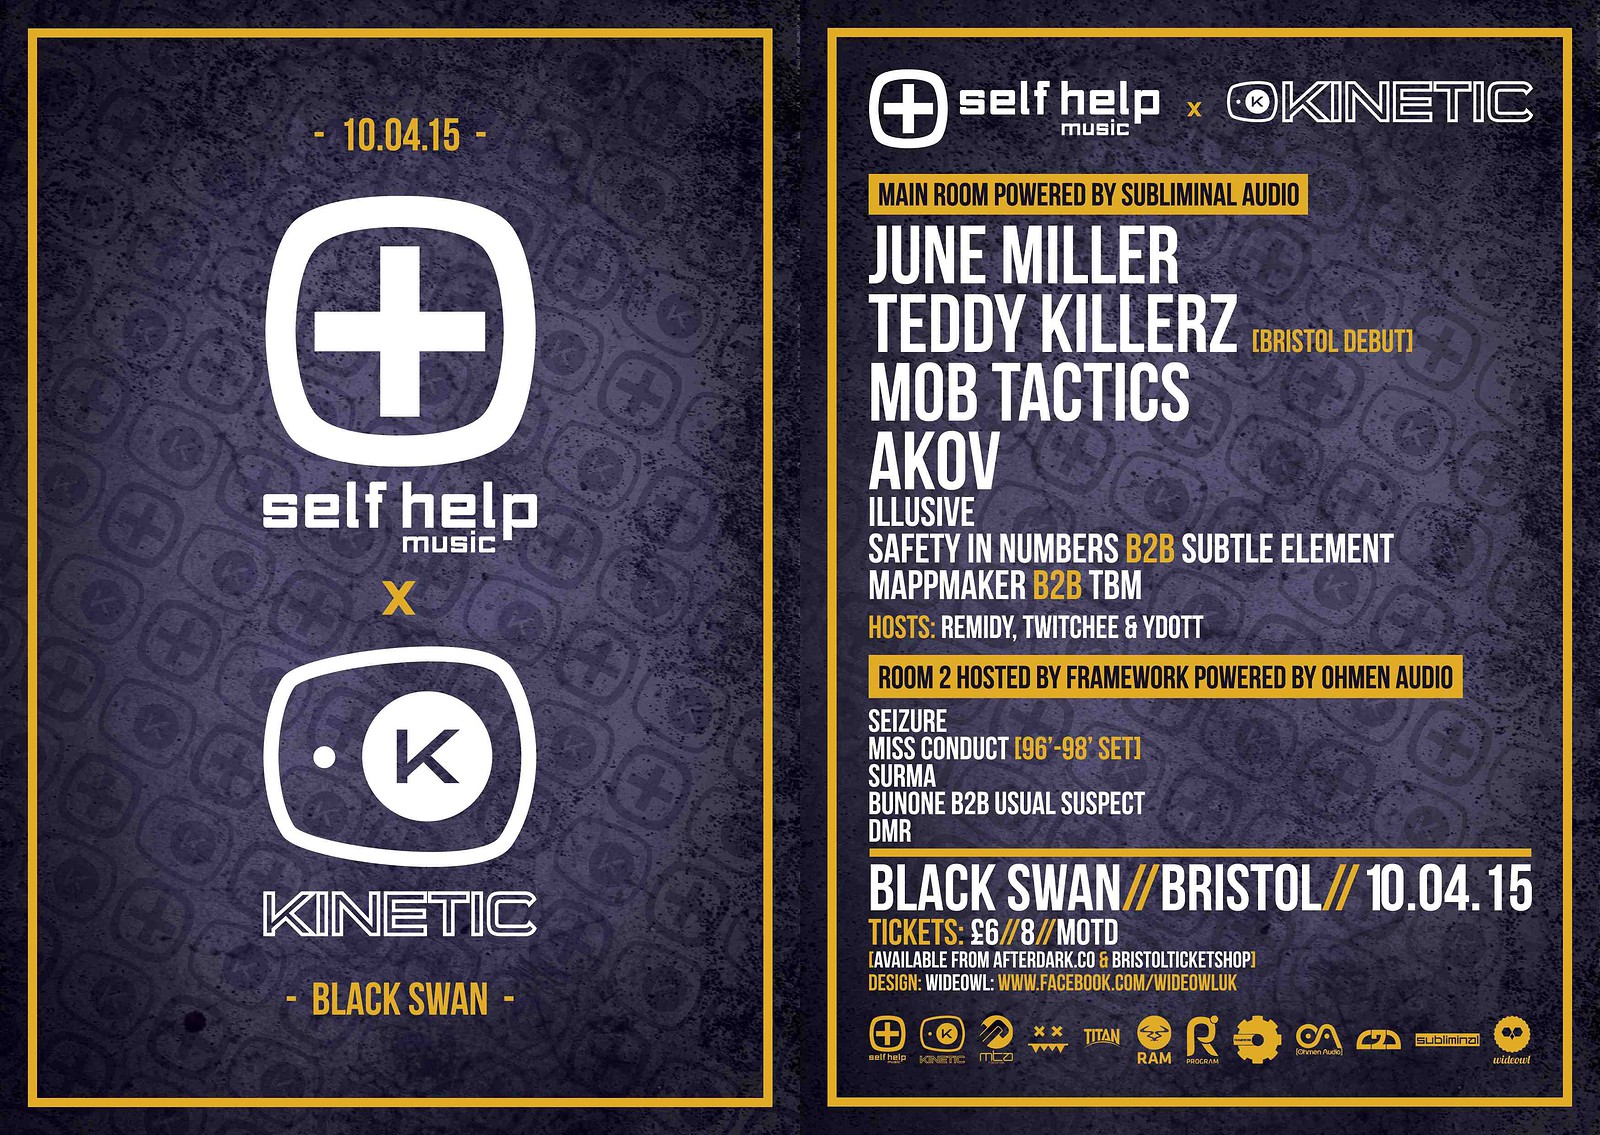 Self Help Music X Kinetic at The Black Swan